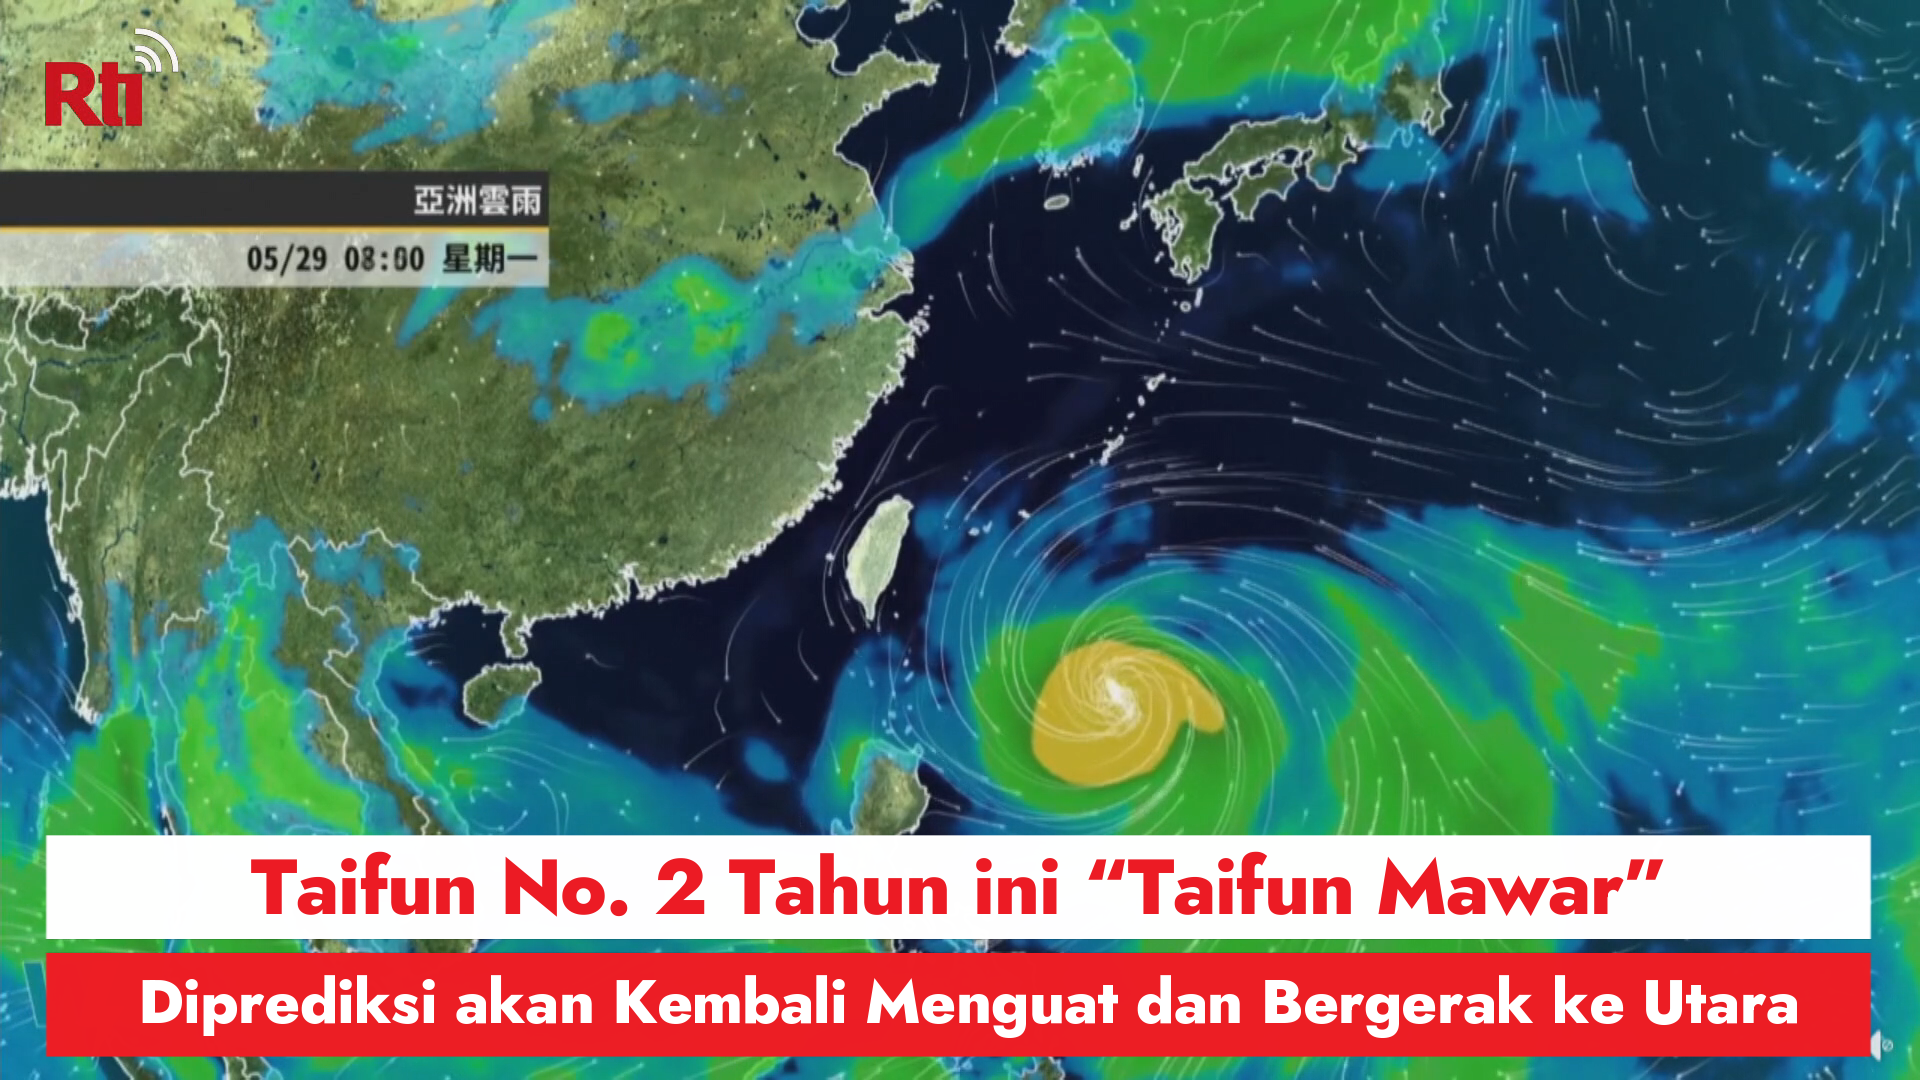 Taifun No. 2 Tahun ini “Taifun Mawar”, Diprediksi akan Kembali Menguat dan Bergerak ke Utara